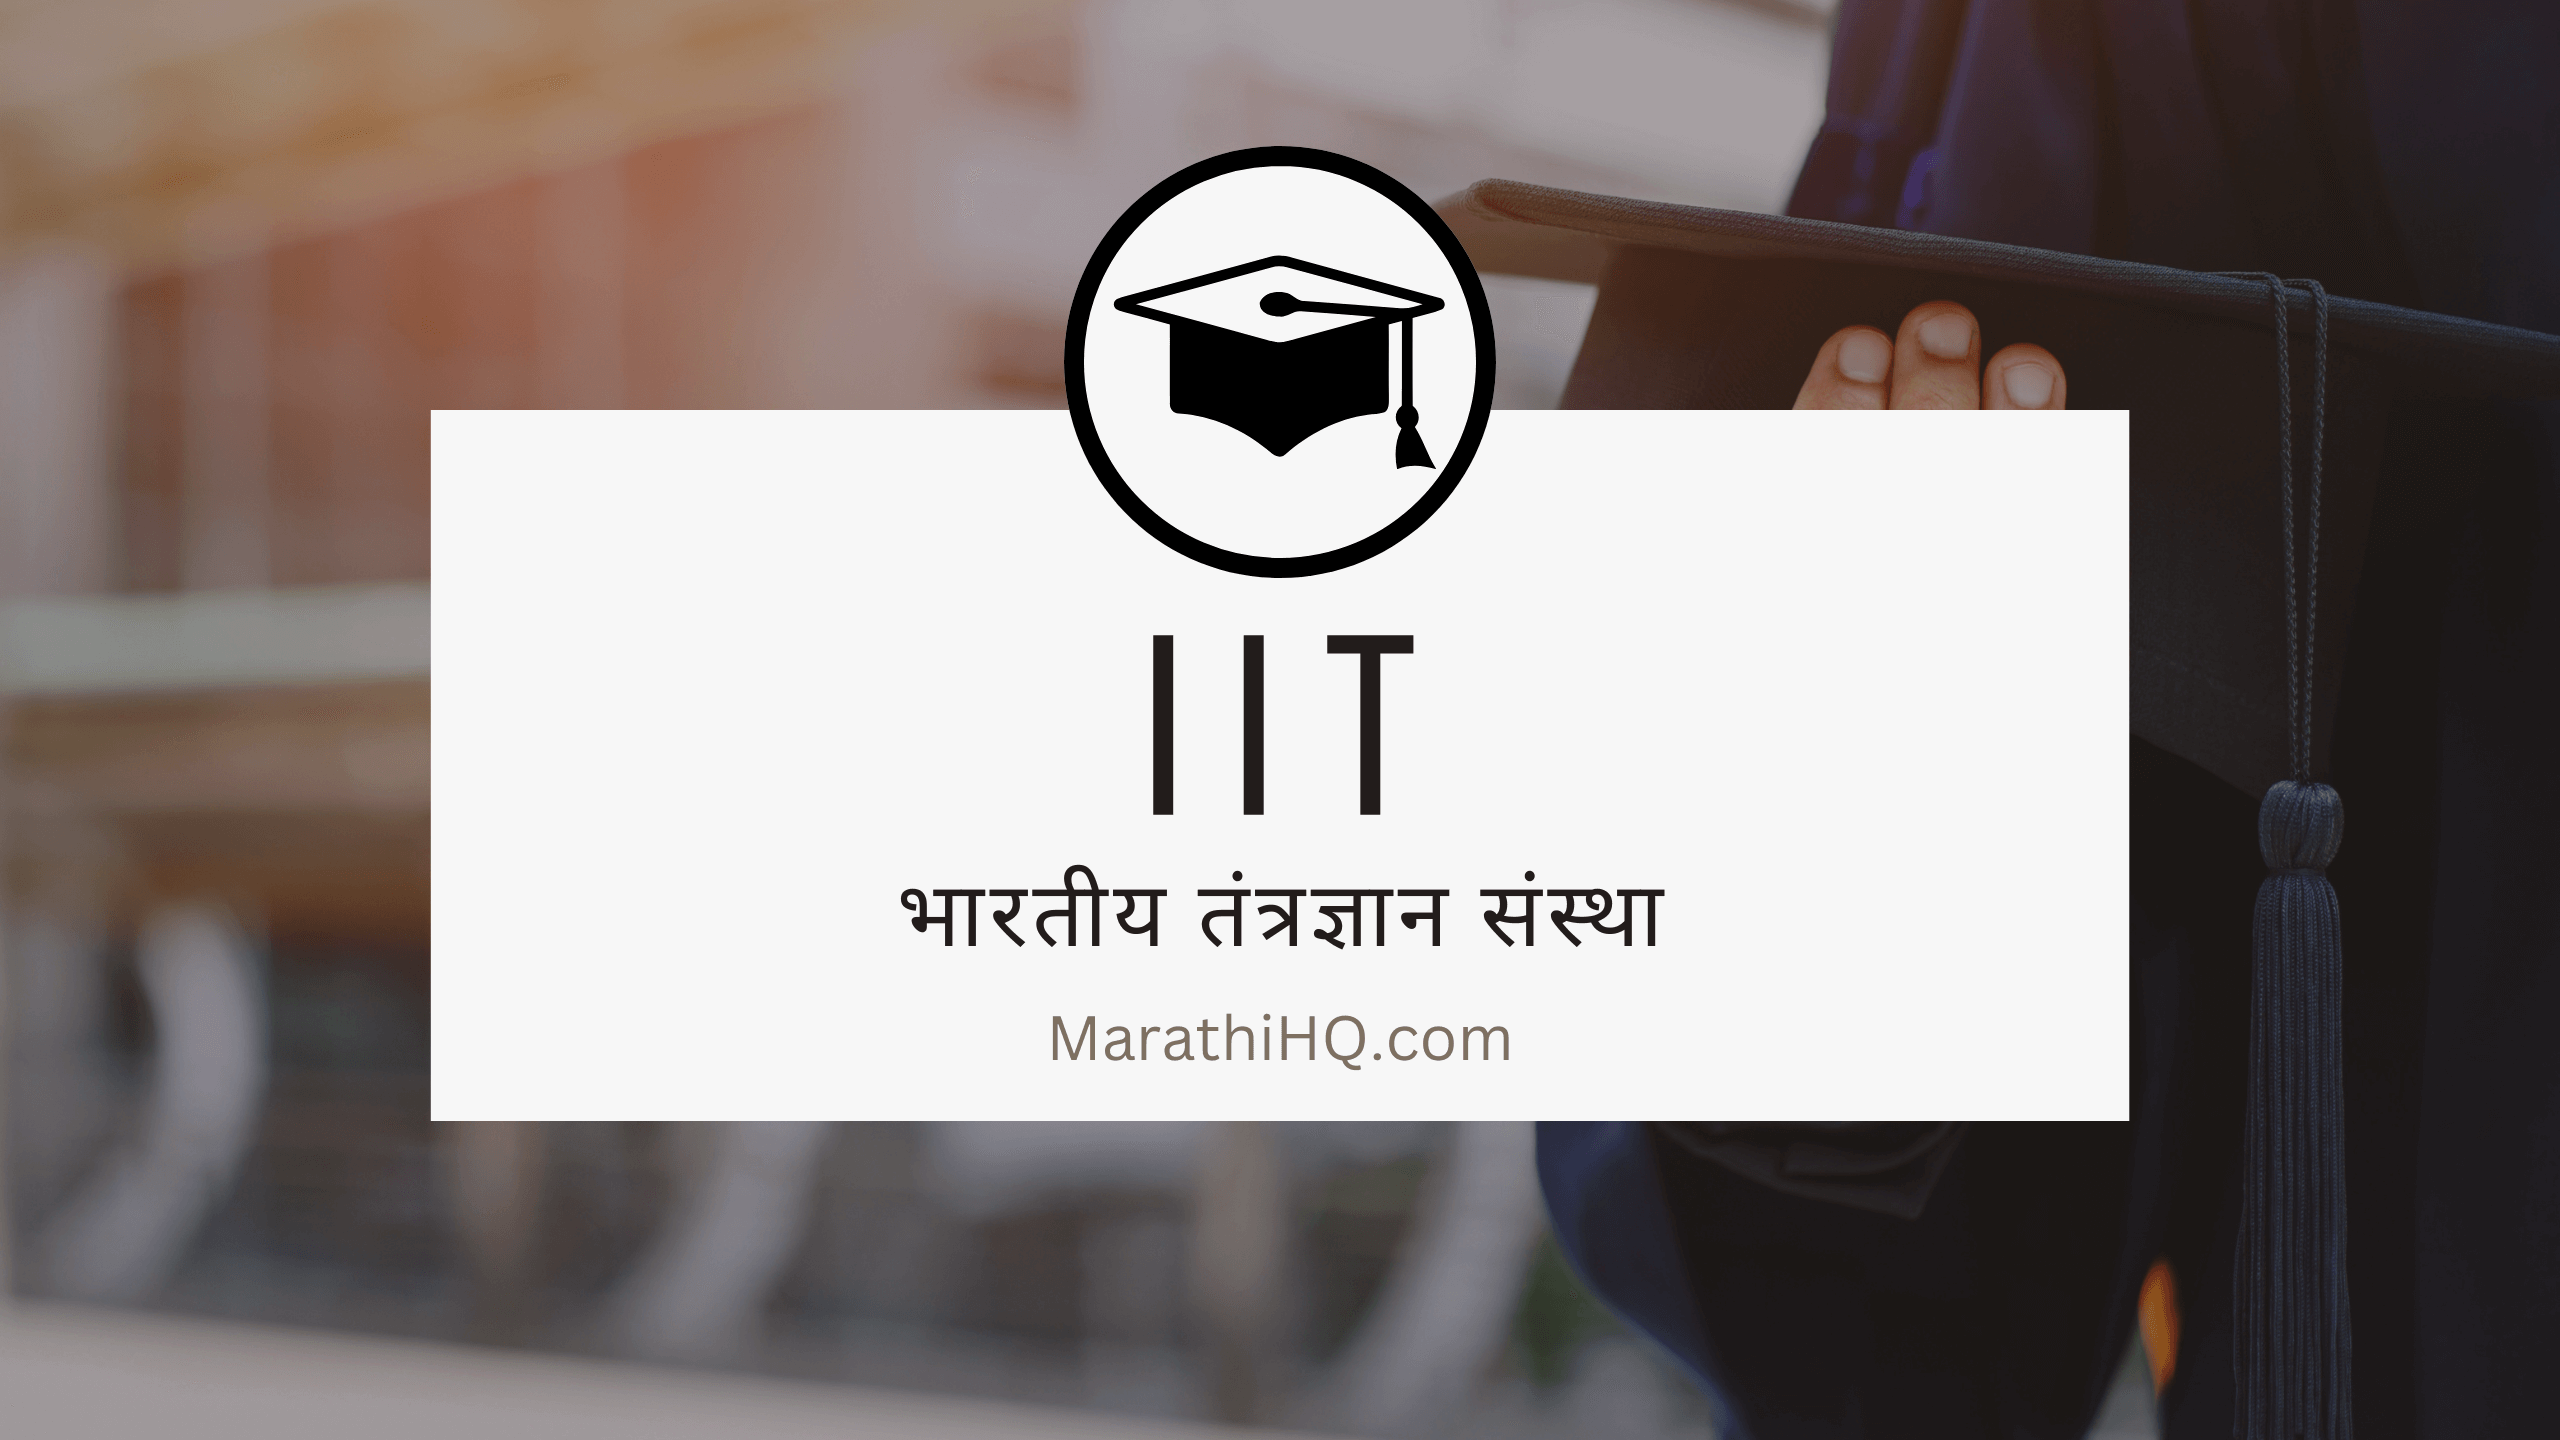 आय आय टी | भारतीय तंत्रज्ञान संस्था | IIT Course Information in Marathi